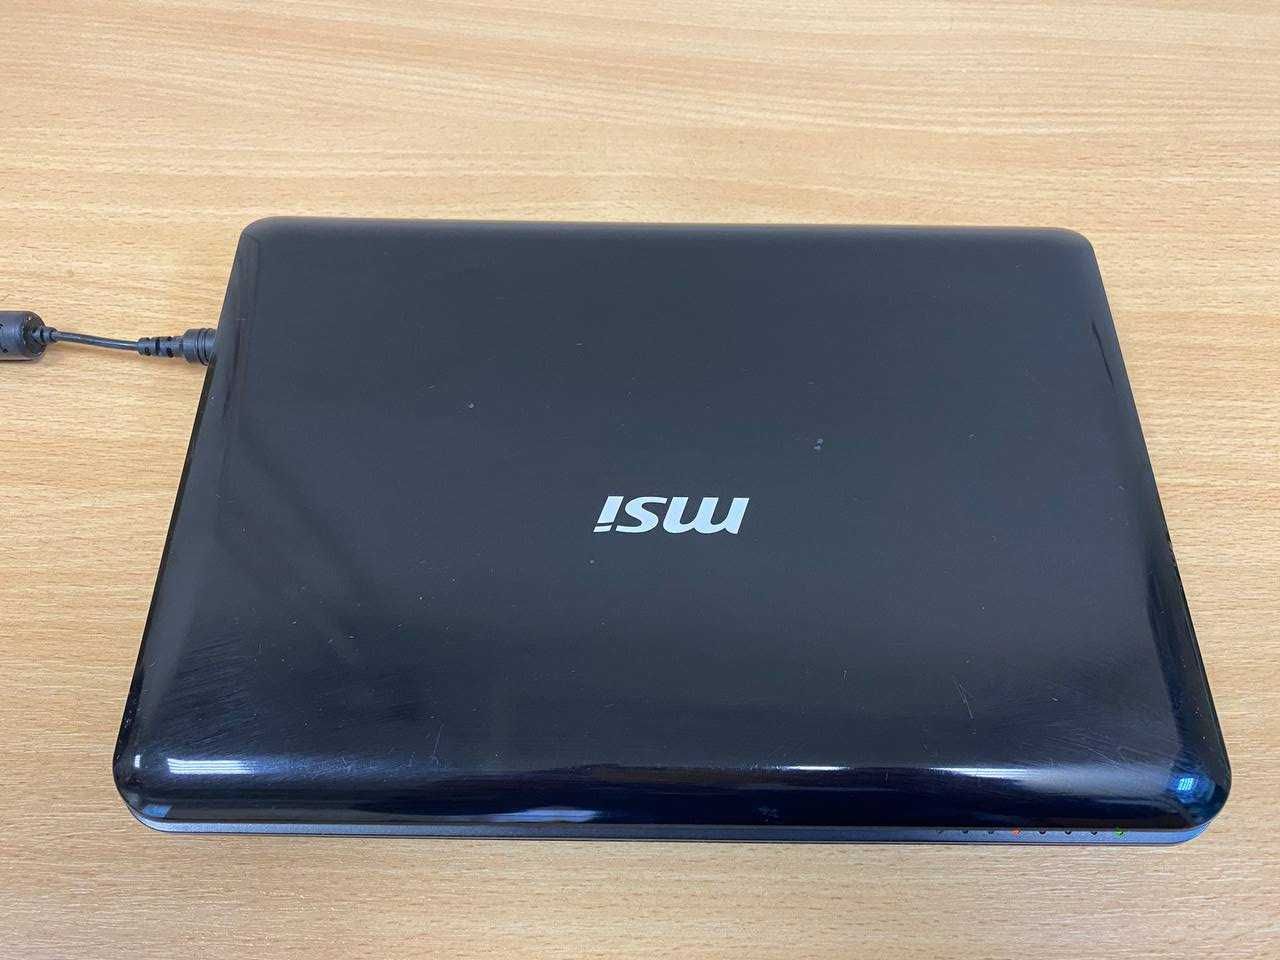 Продам Нетбук (ноутбук) MSI U100